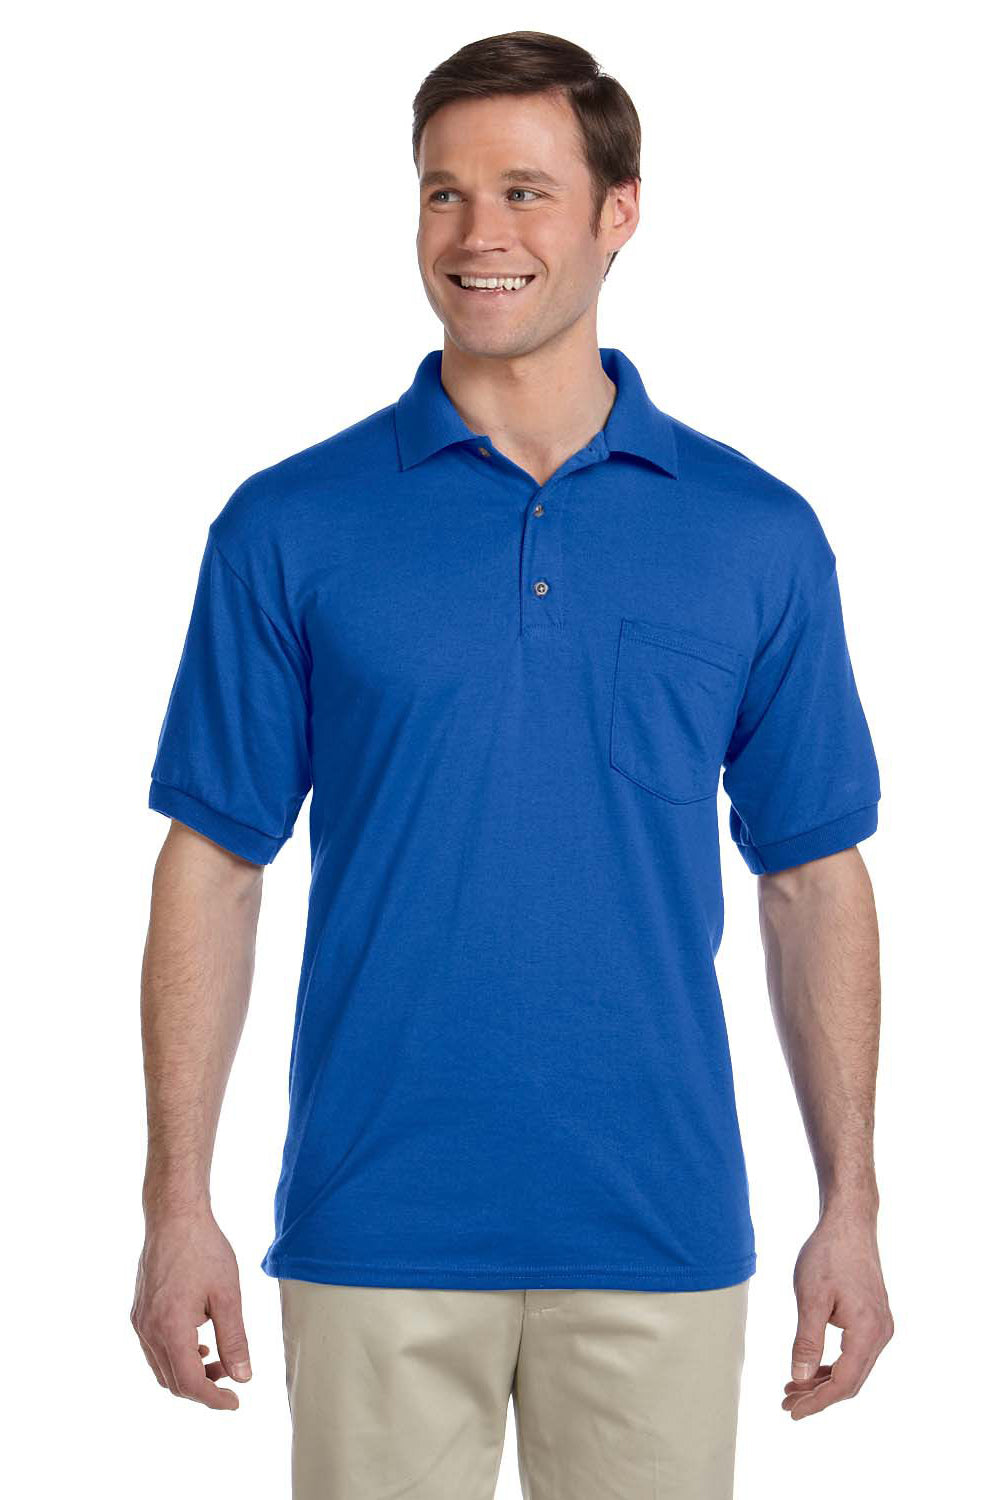 Gildan G890 Mens DryBlend Moisture Wicking Short Sleeve Polo Shirt w/ Pocket Royal Blue Front